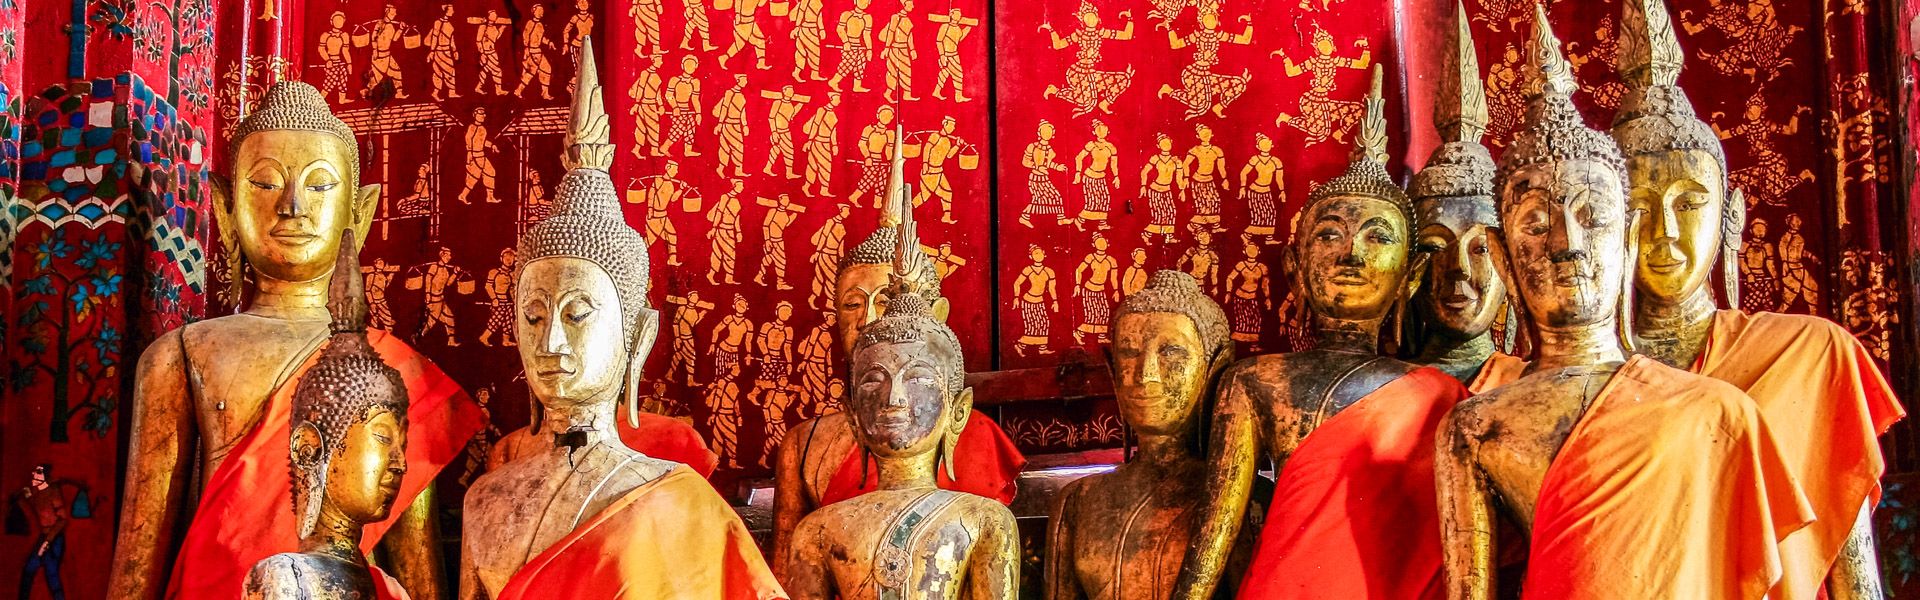 Buddha Statuen in Laos |  Exotissimo Travel Thailand / Chamleon